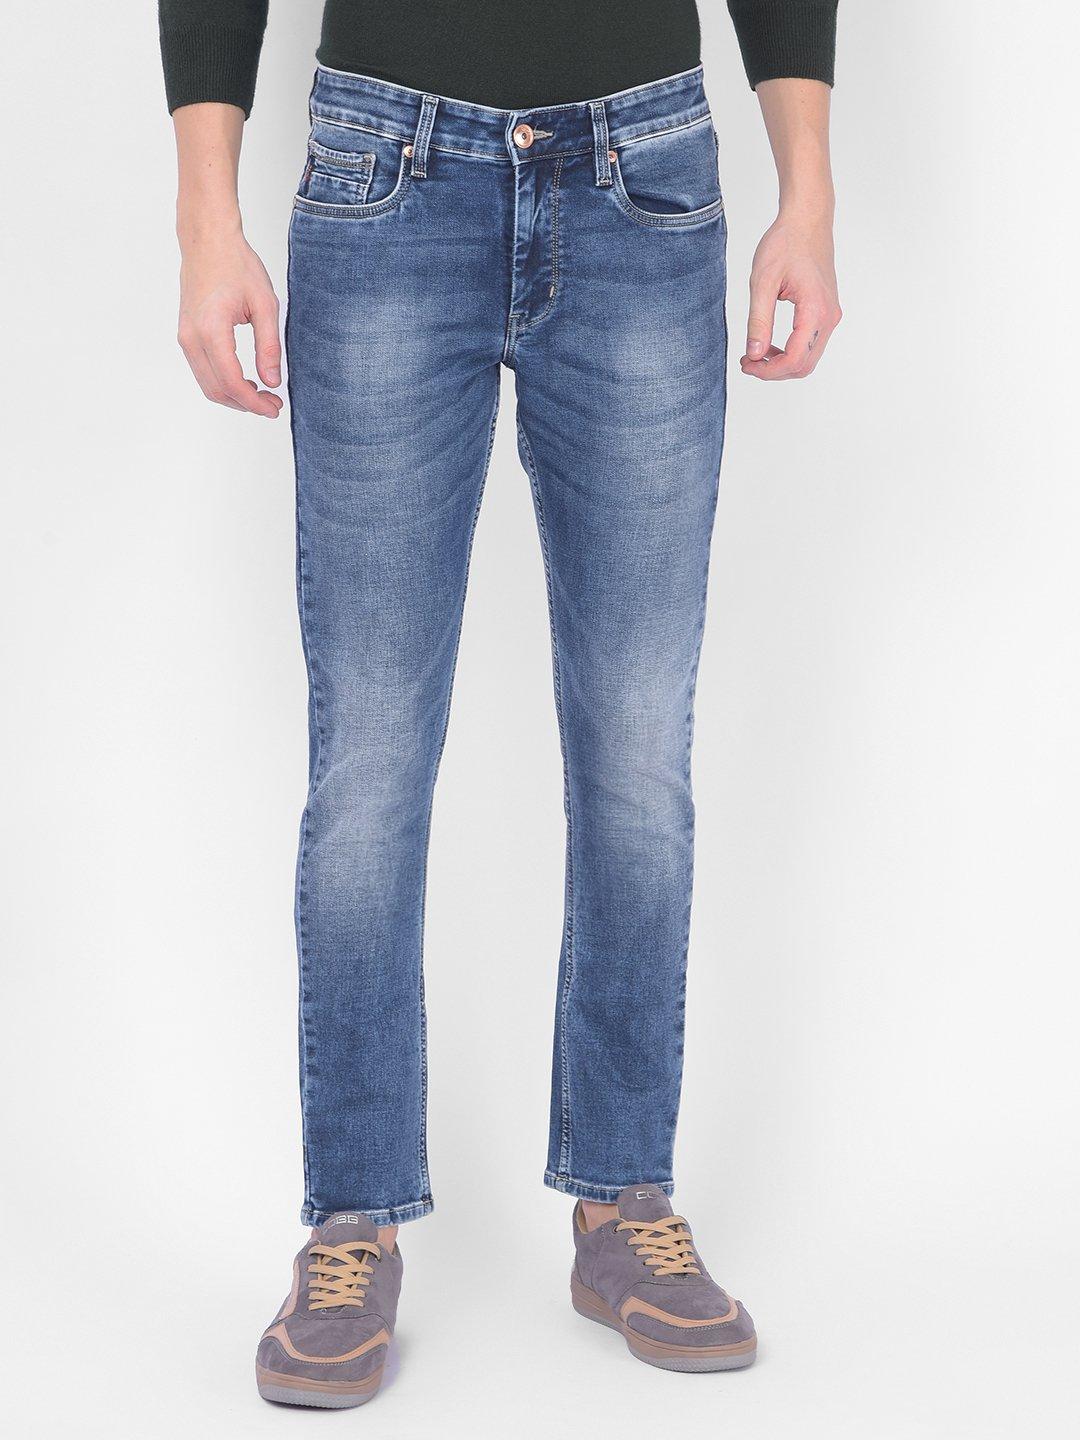 Buy Super Skinny Men's Jeans Online | Numero Uno